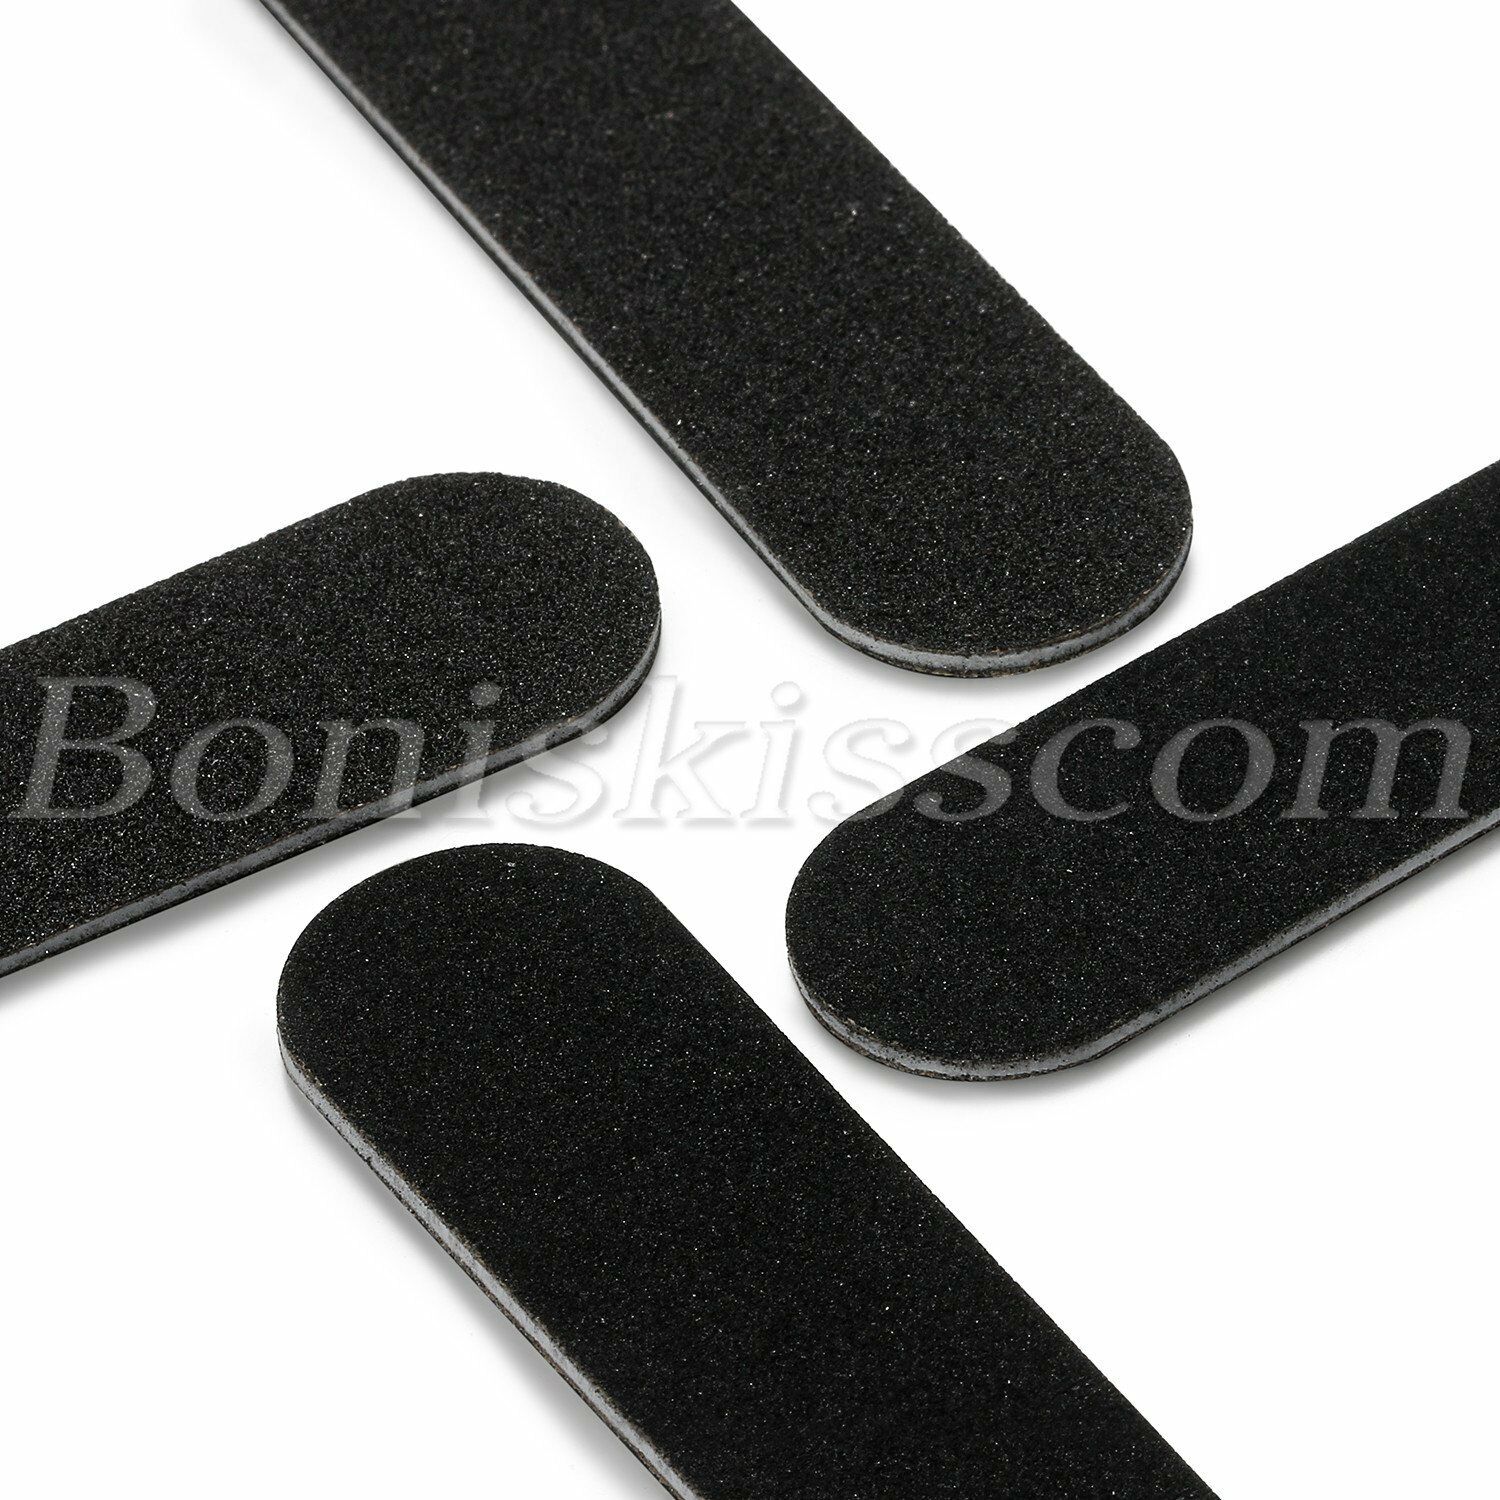 10pcs Pro Black Double Sided Manicure Sanding Nail Art File Buffer Emery Boards